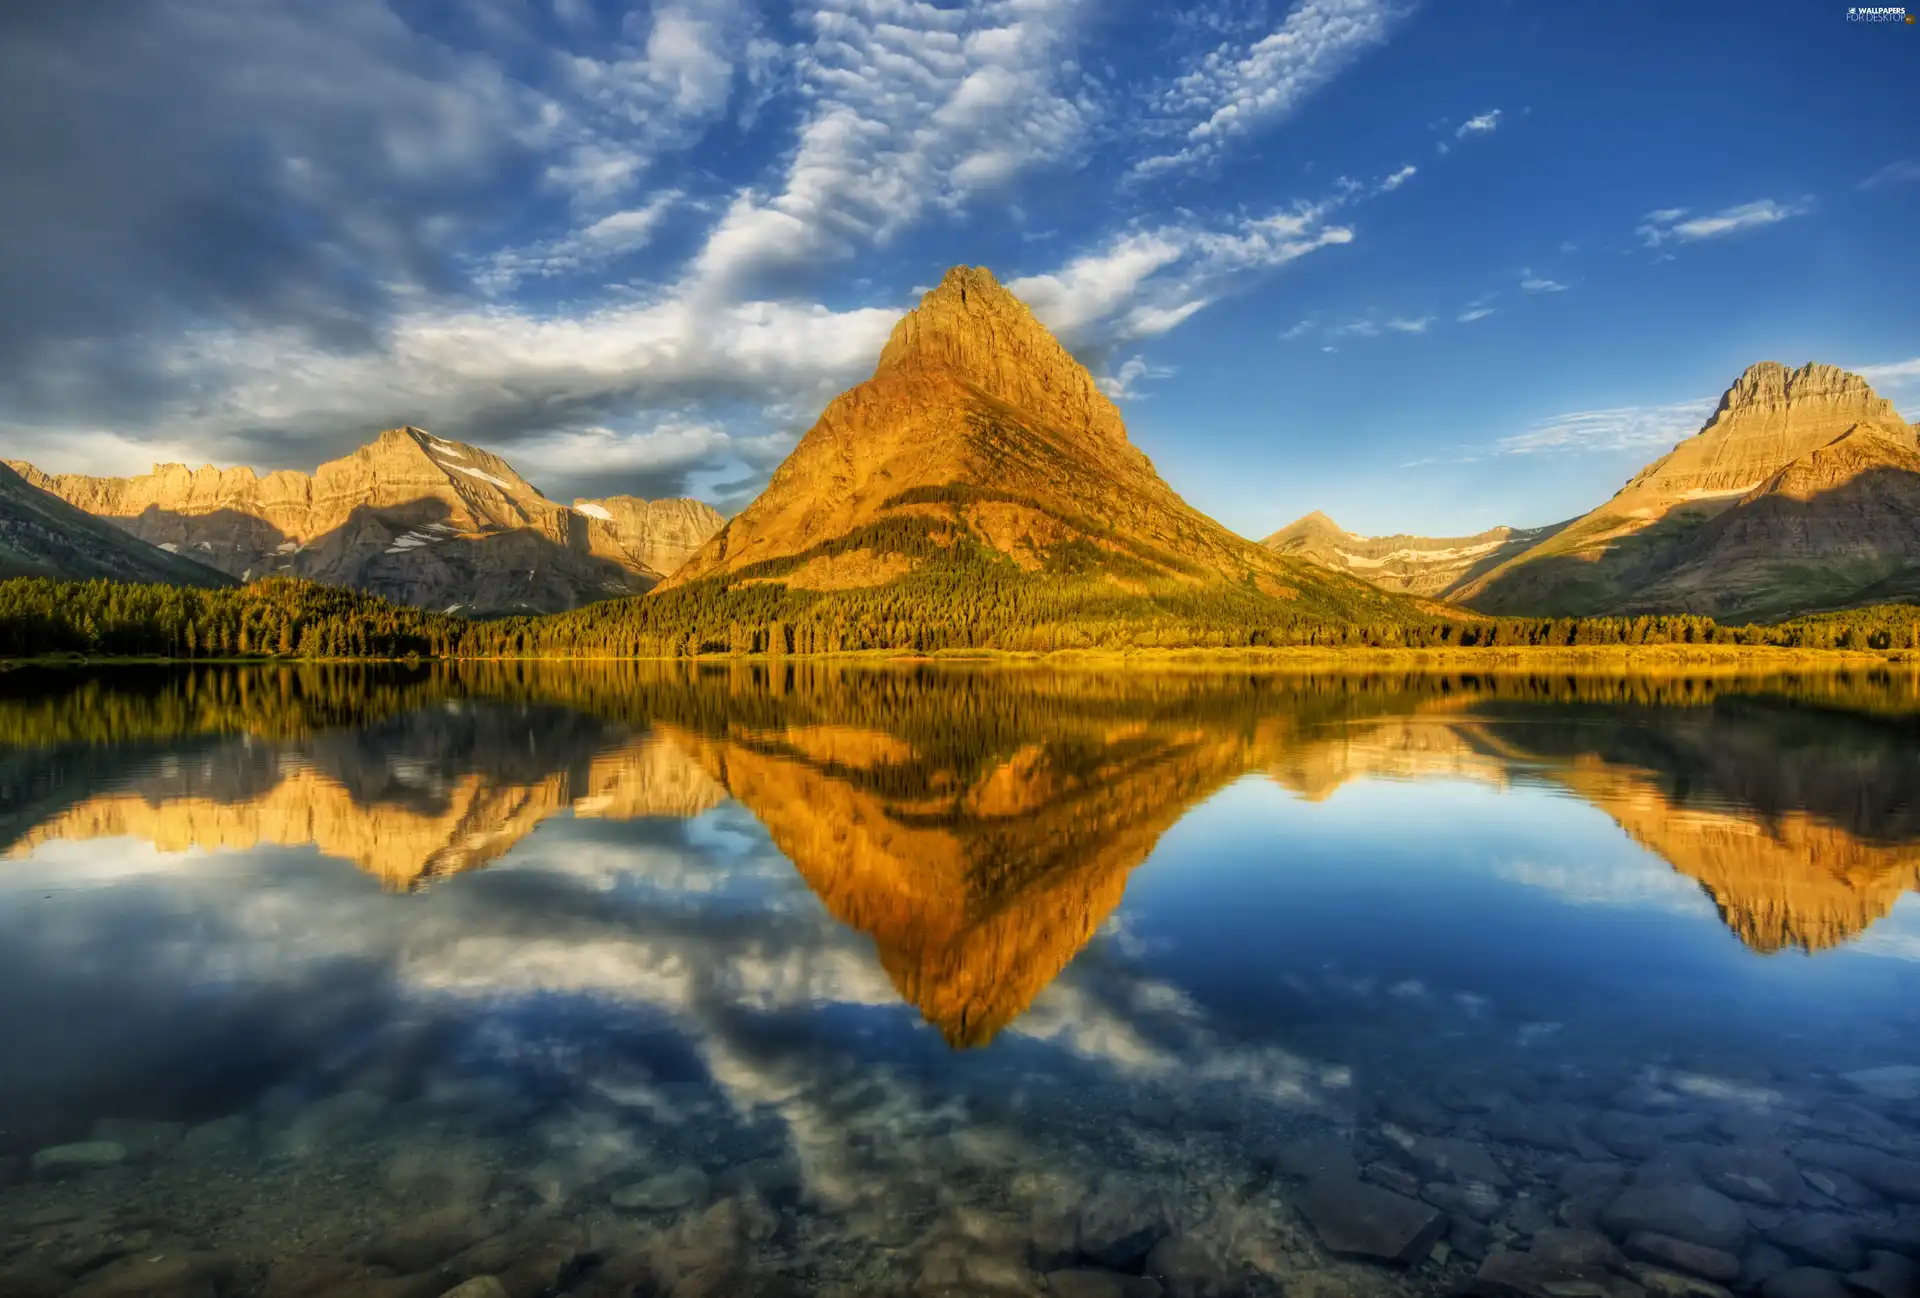 Mountains, reflection, lake, clouds